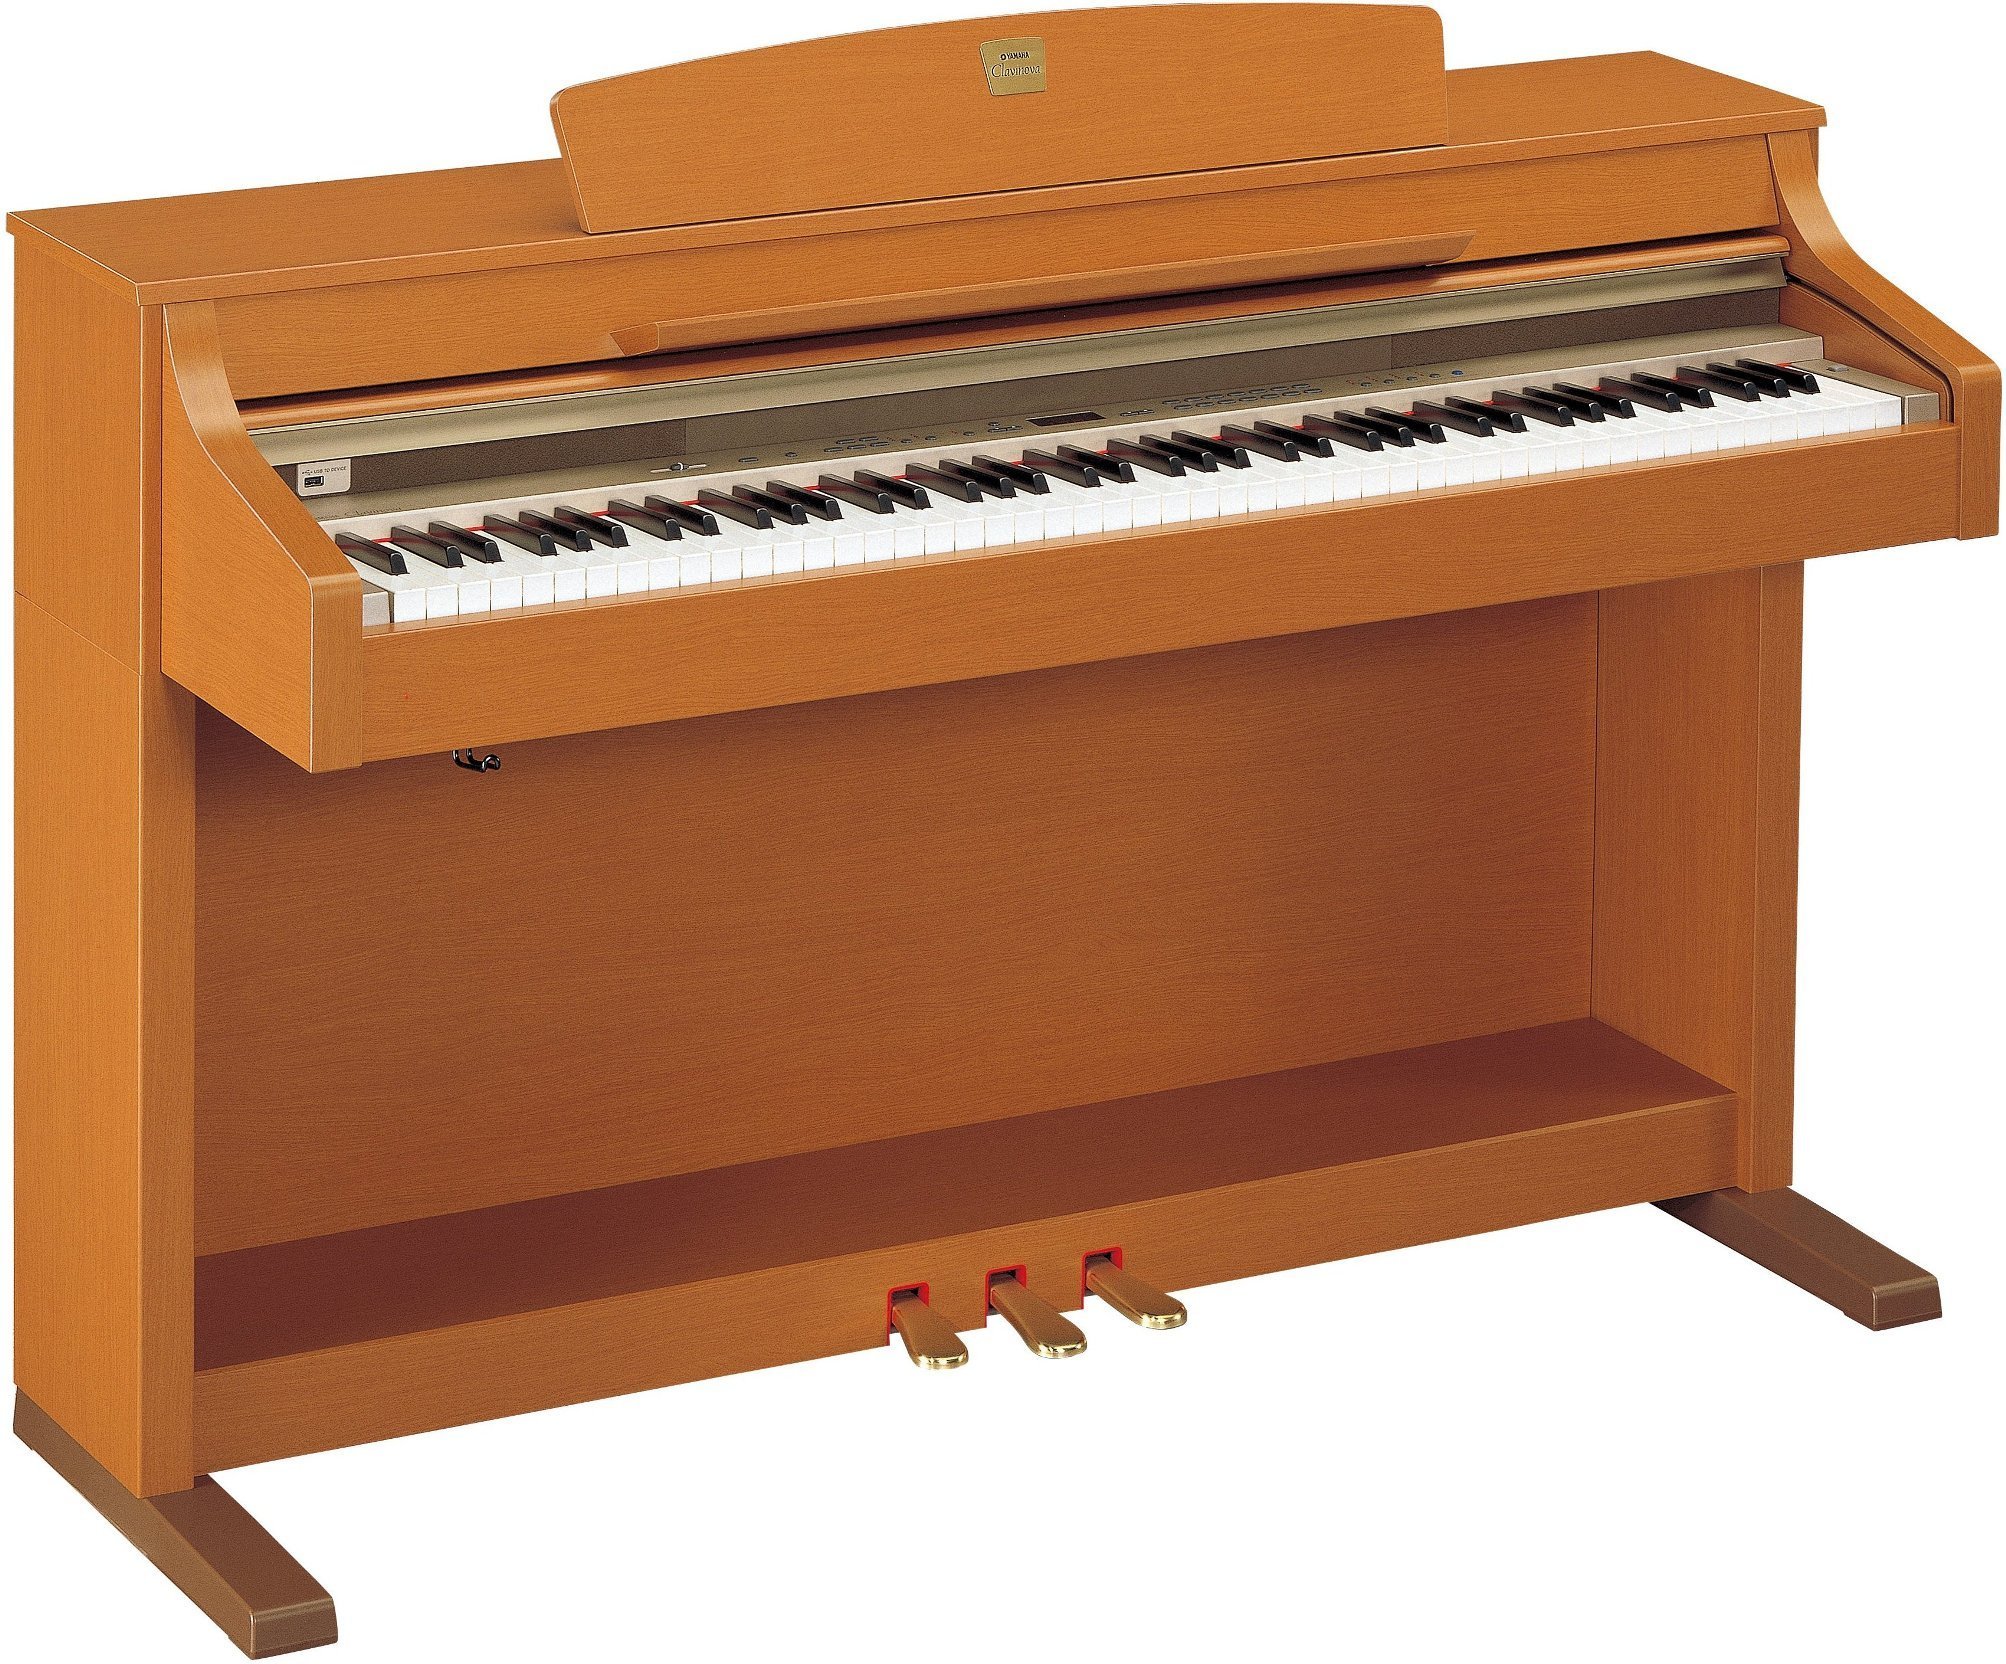 CLP-300 Series - Lineup - Clavinova - Piano - Alat Musik - Produk